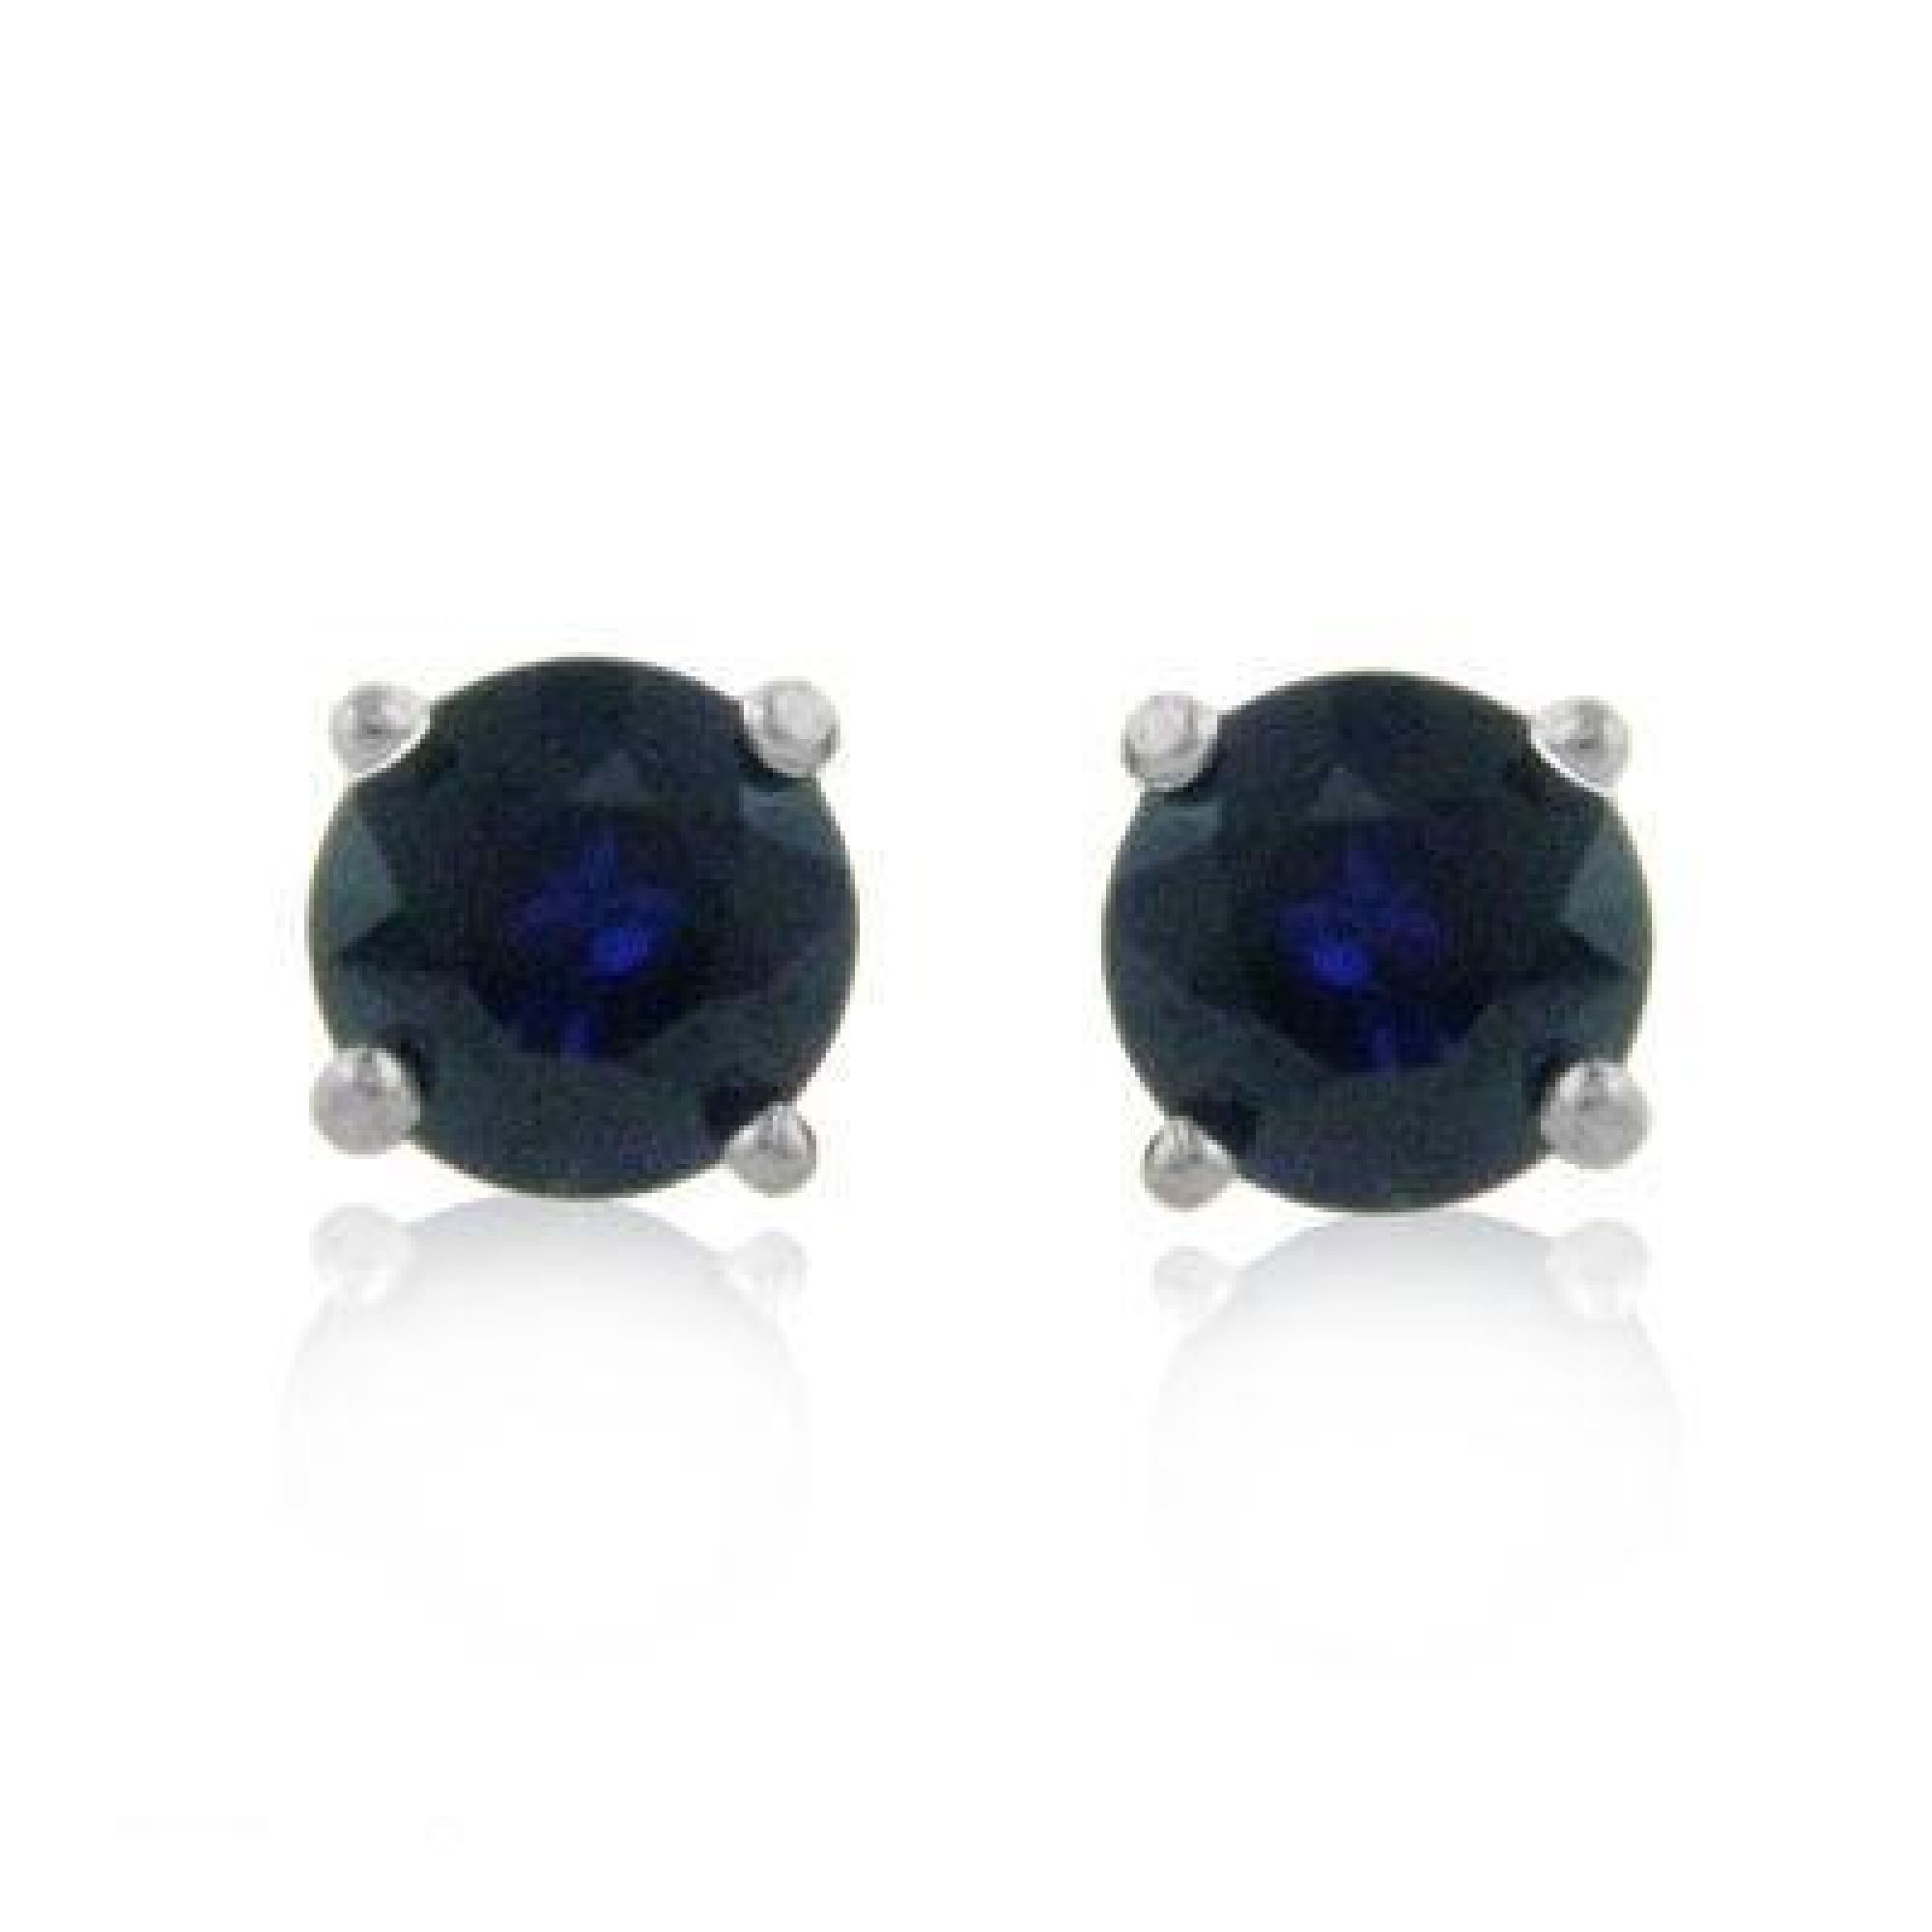 2 Carat Genuine Blue Sapphire Stud Earrings in Sterling